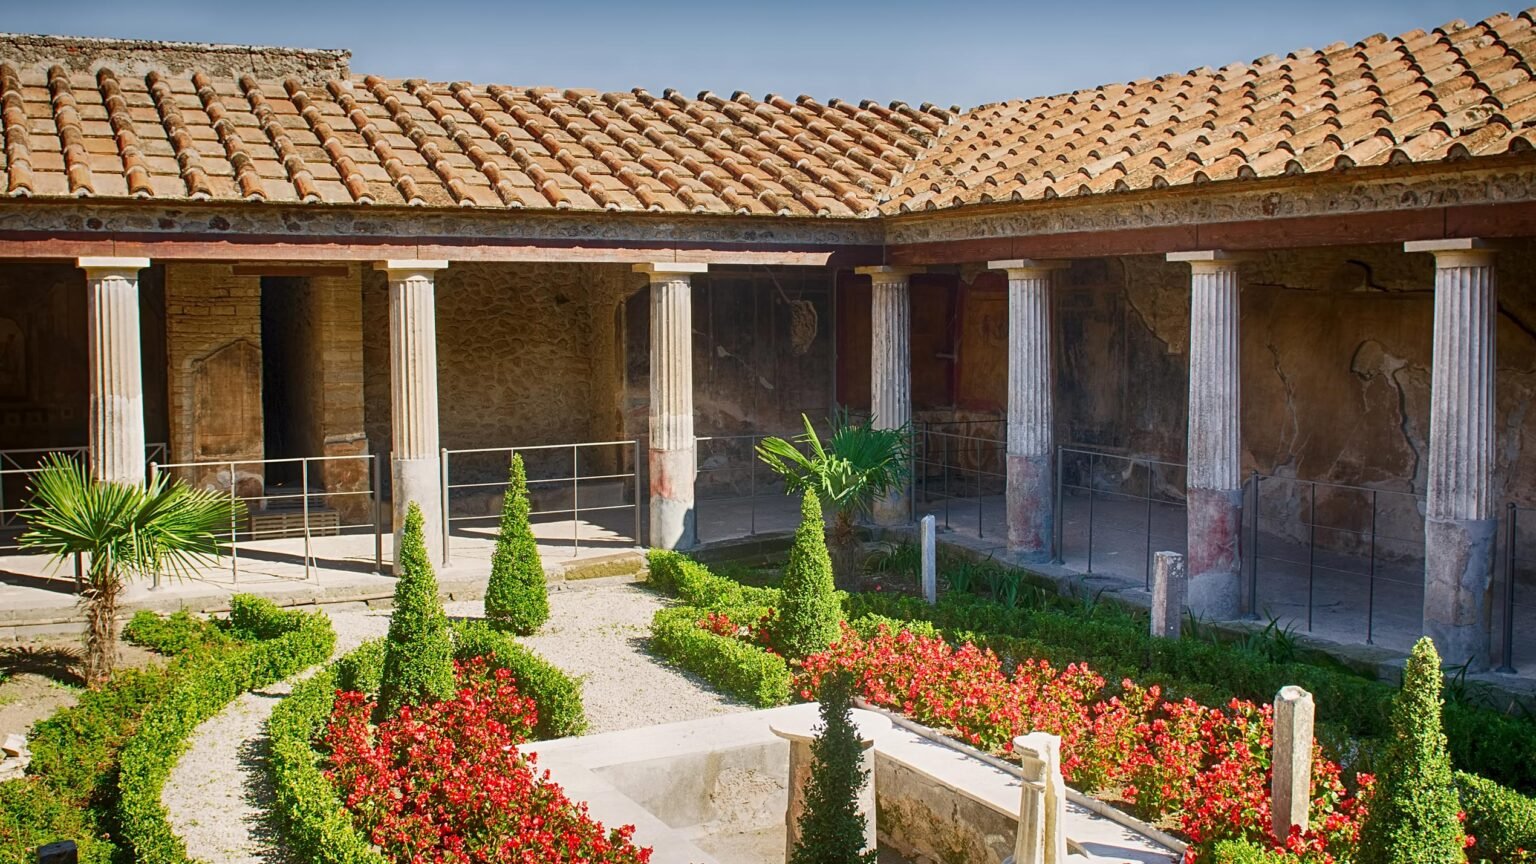 Roman villa gardens - luxury house in Pompeii.